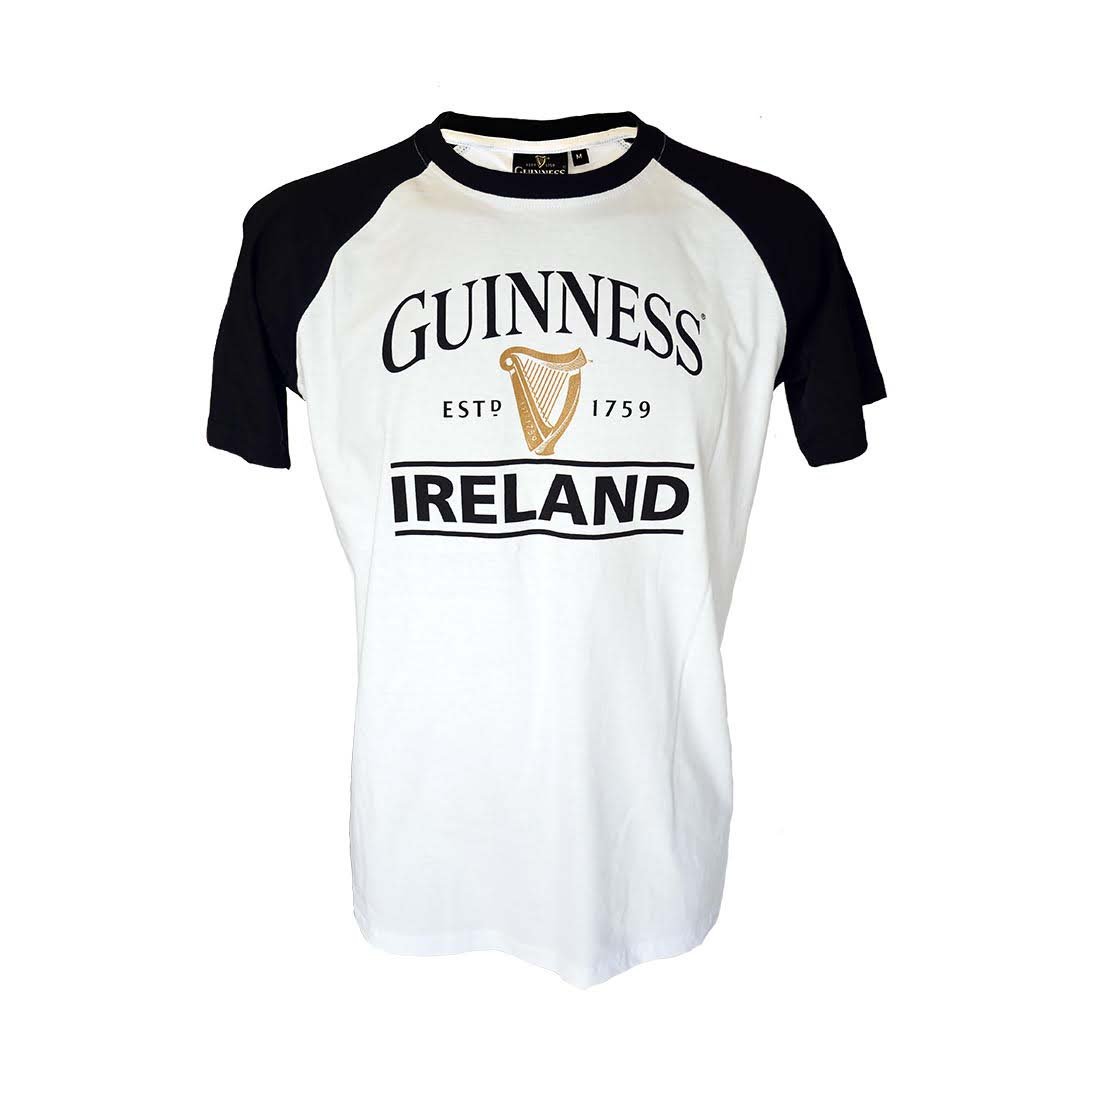 Guinness Irland Est 1759 T-Shirt Harfe Schwarz Weiß, weiß, XXL